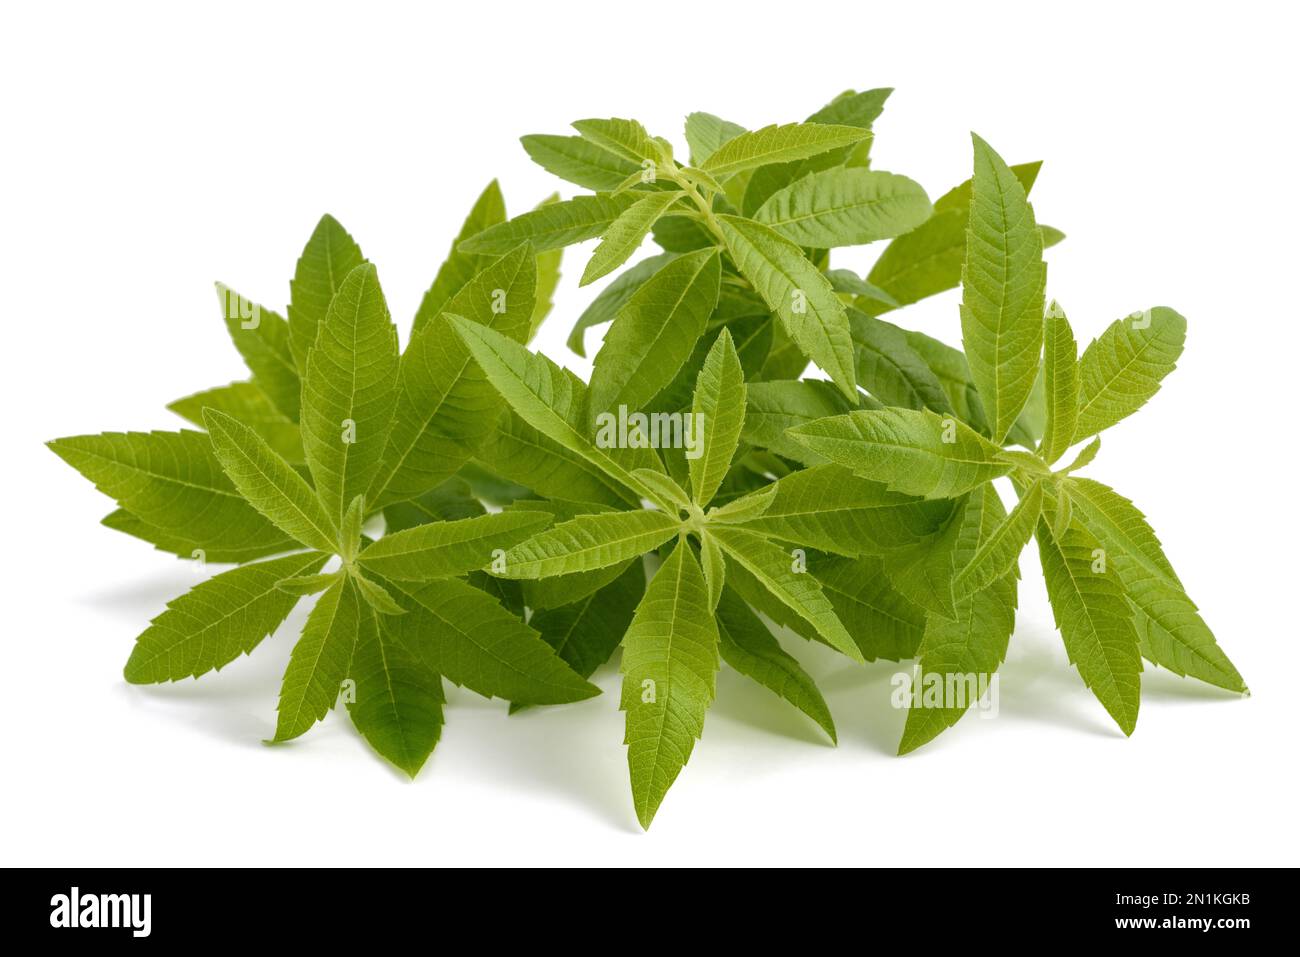 Lemon verbena plants isolated on white background Stock Photo